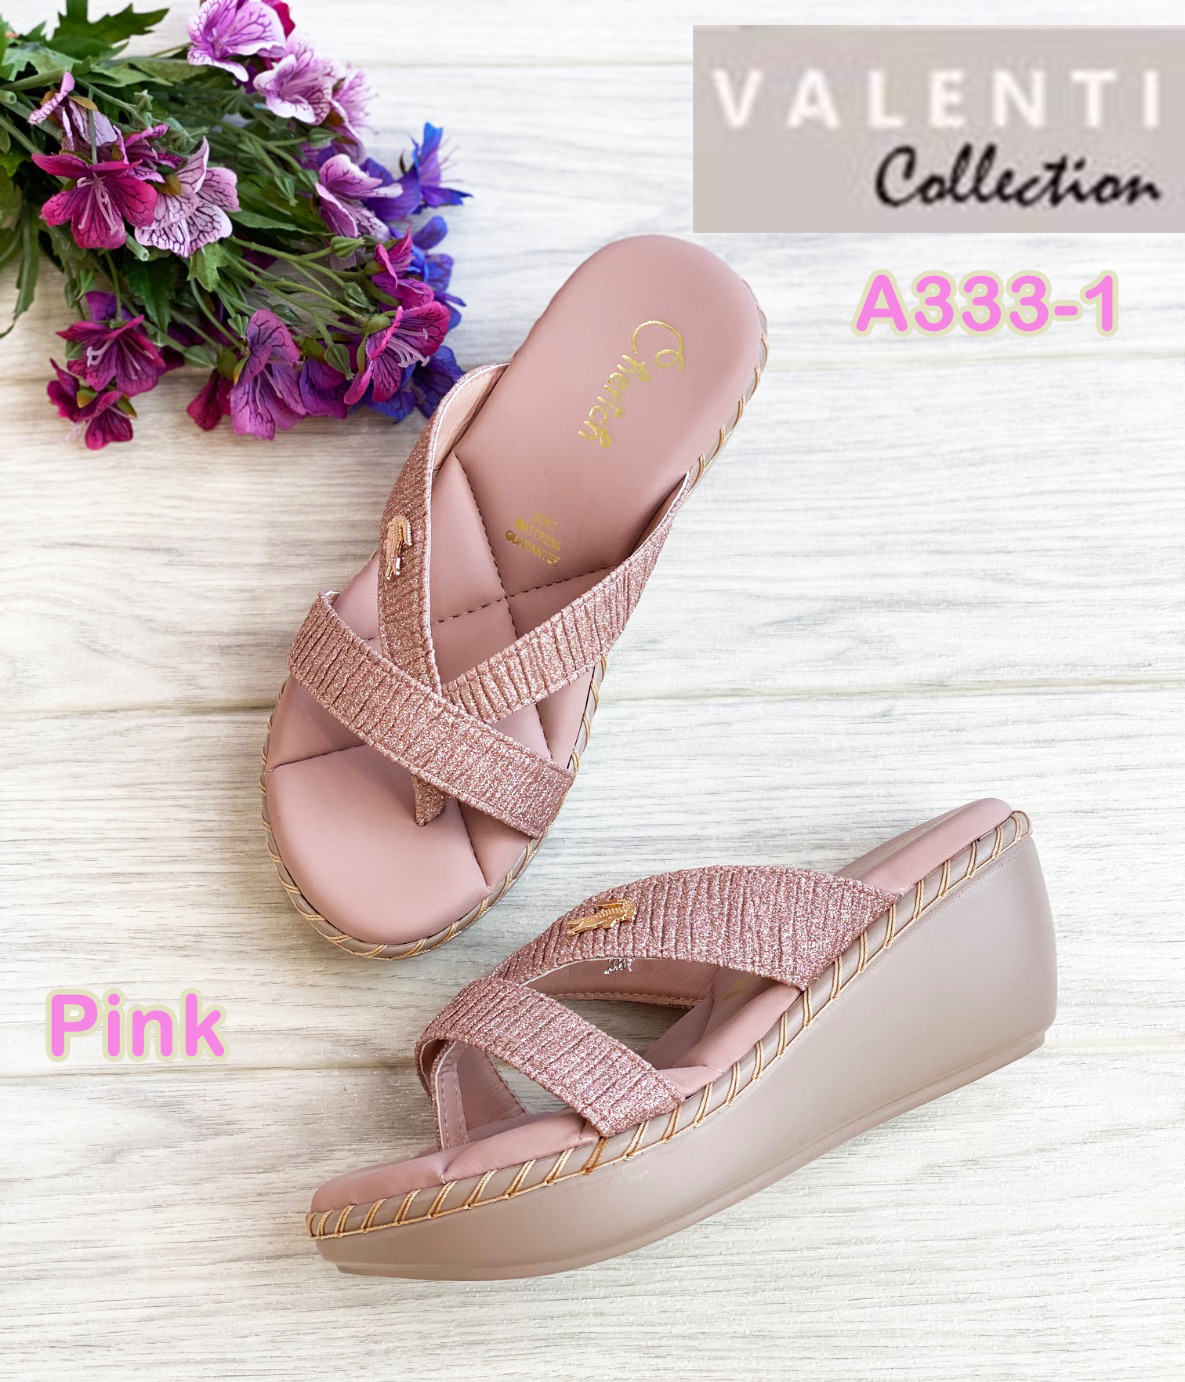 Valenti Collection รองเท้าเพื่อสุขภาพ Health & massage Therapy super soft  รุ่นขายดี นุ่มมาก เบา ใส่สบาย รุ่น A333-1